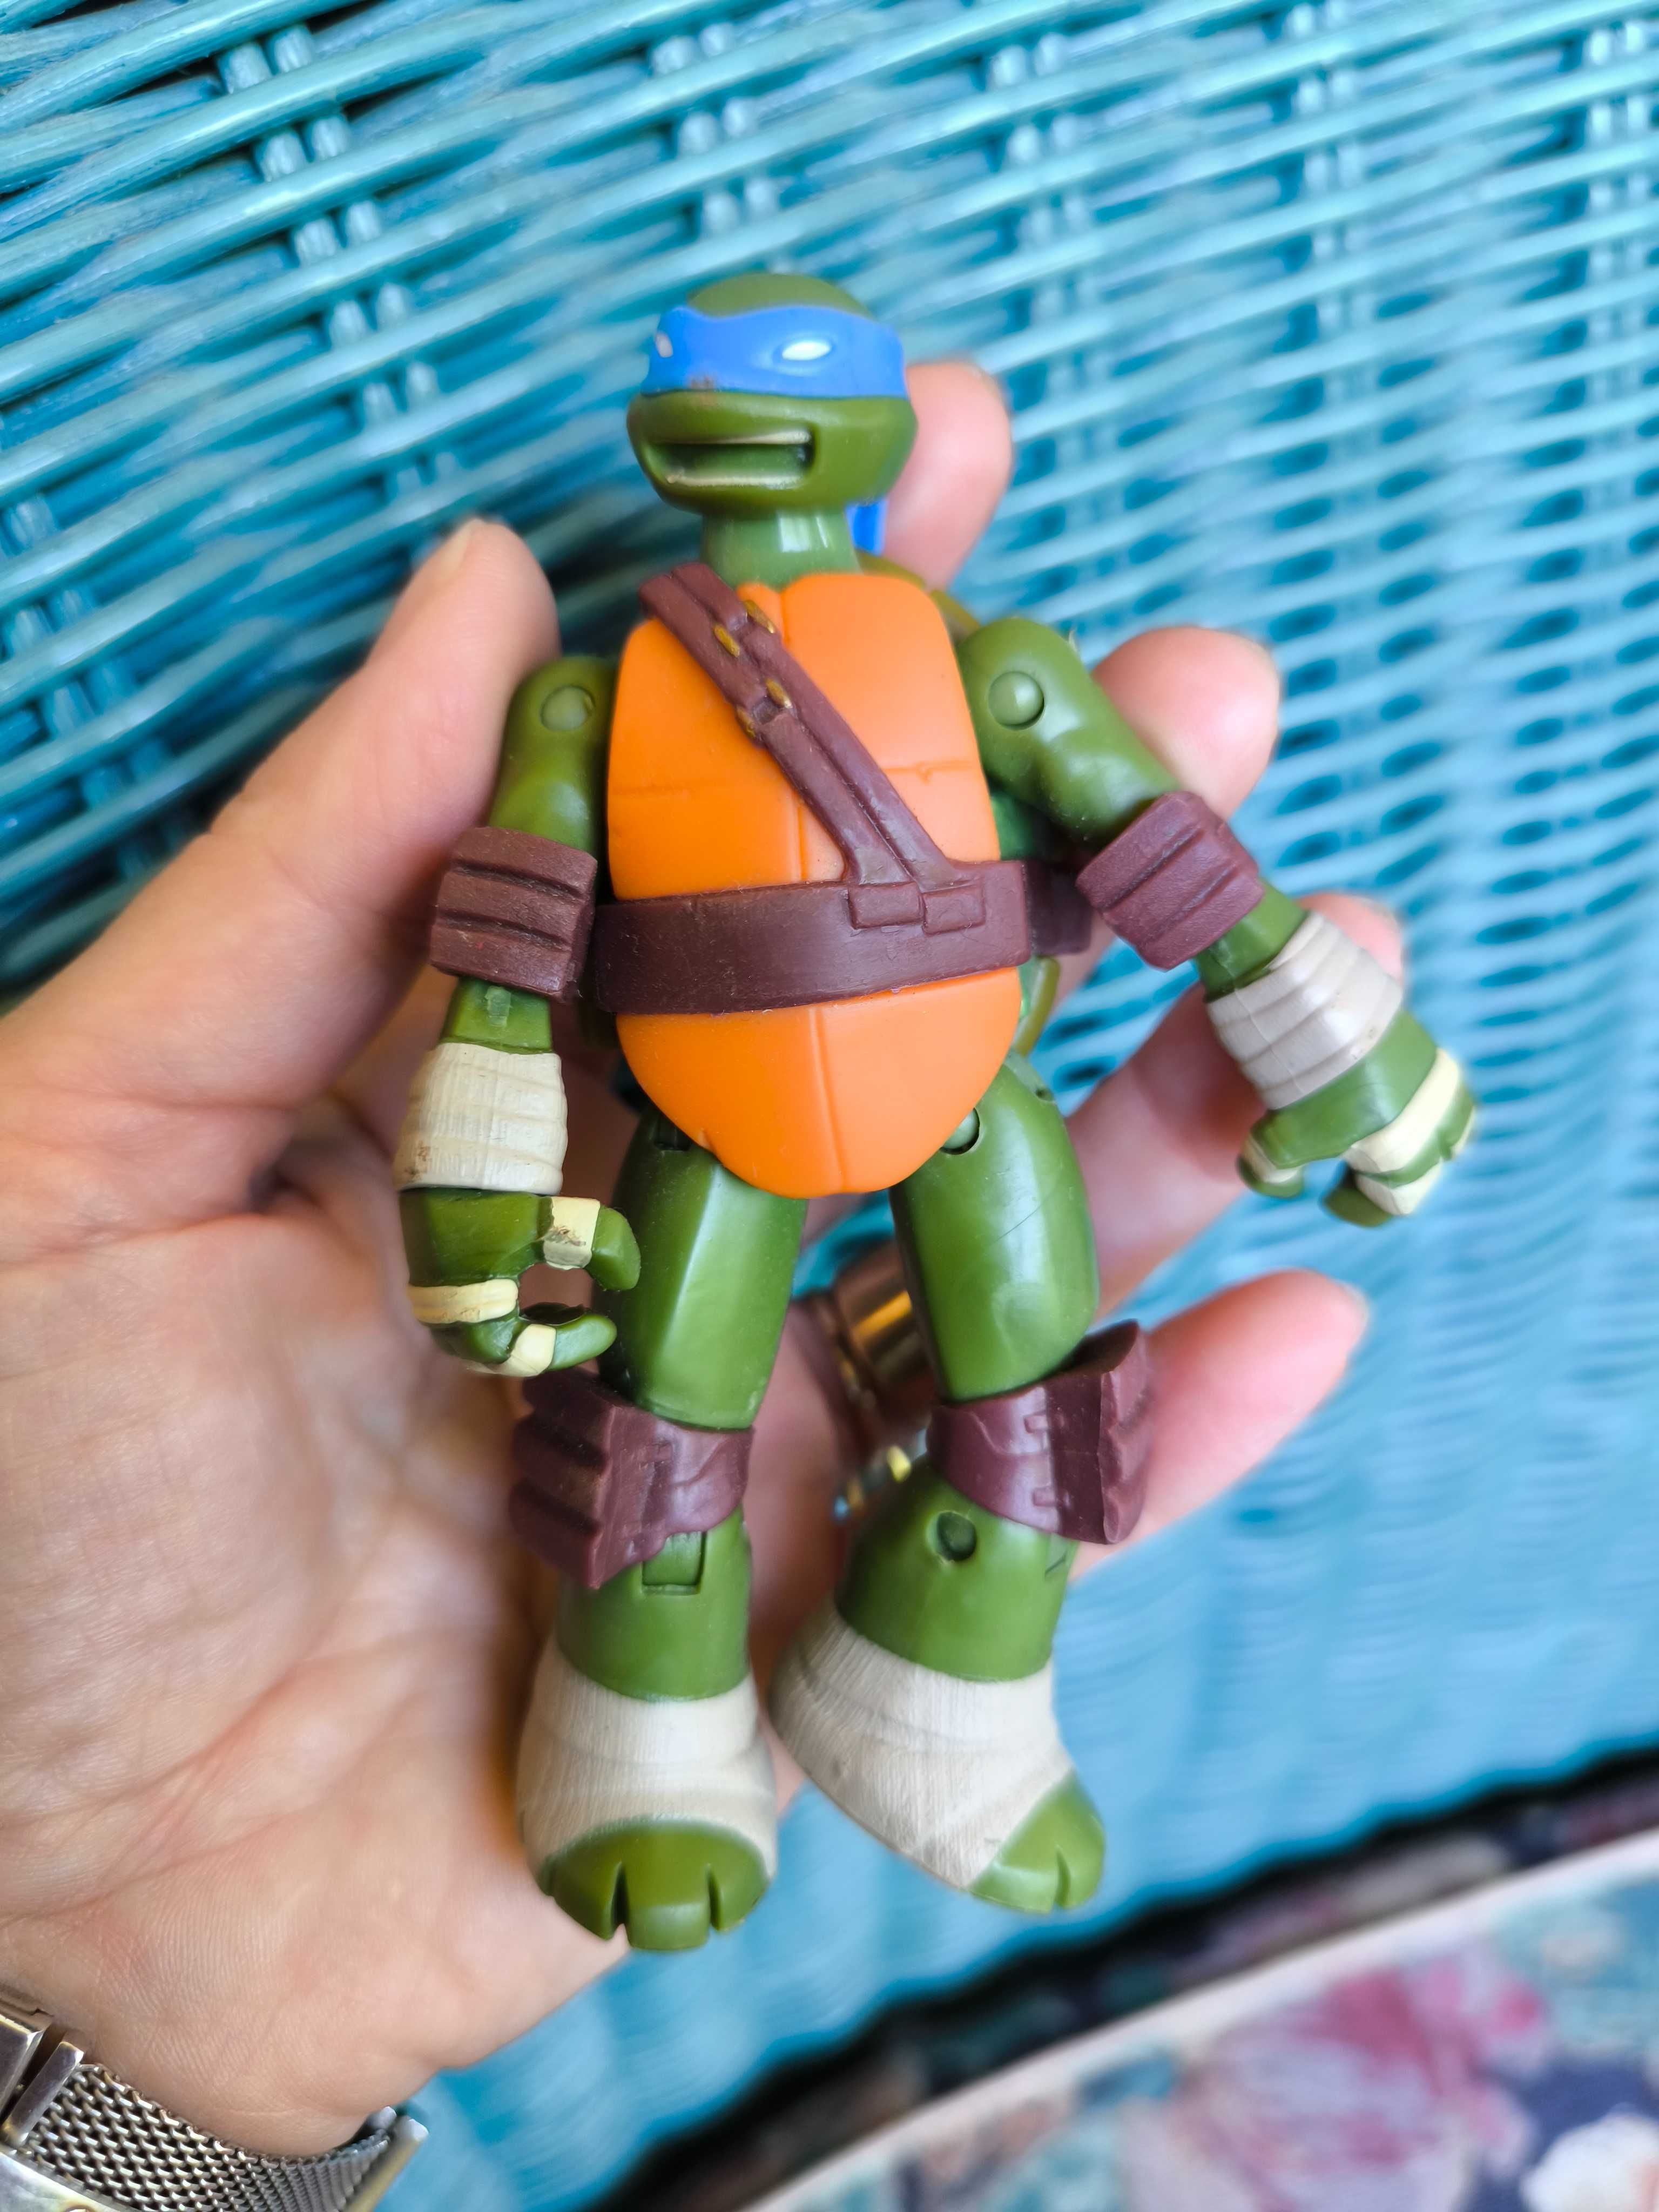 Figurine țestoasele Ninja Originale